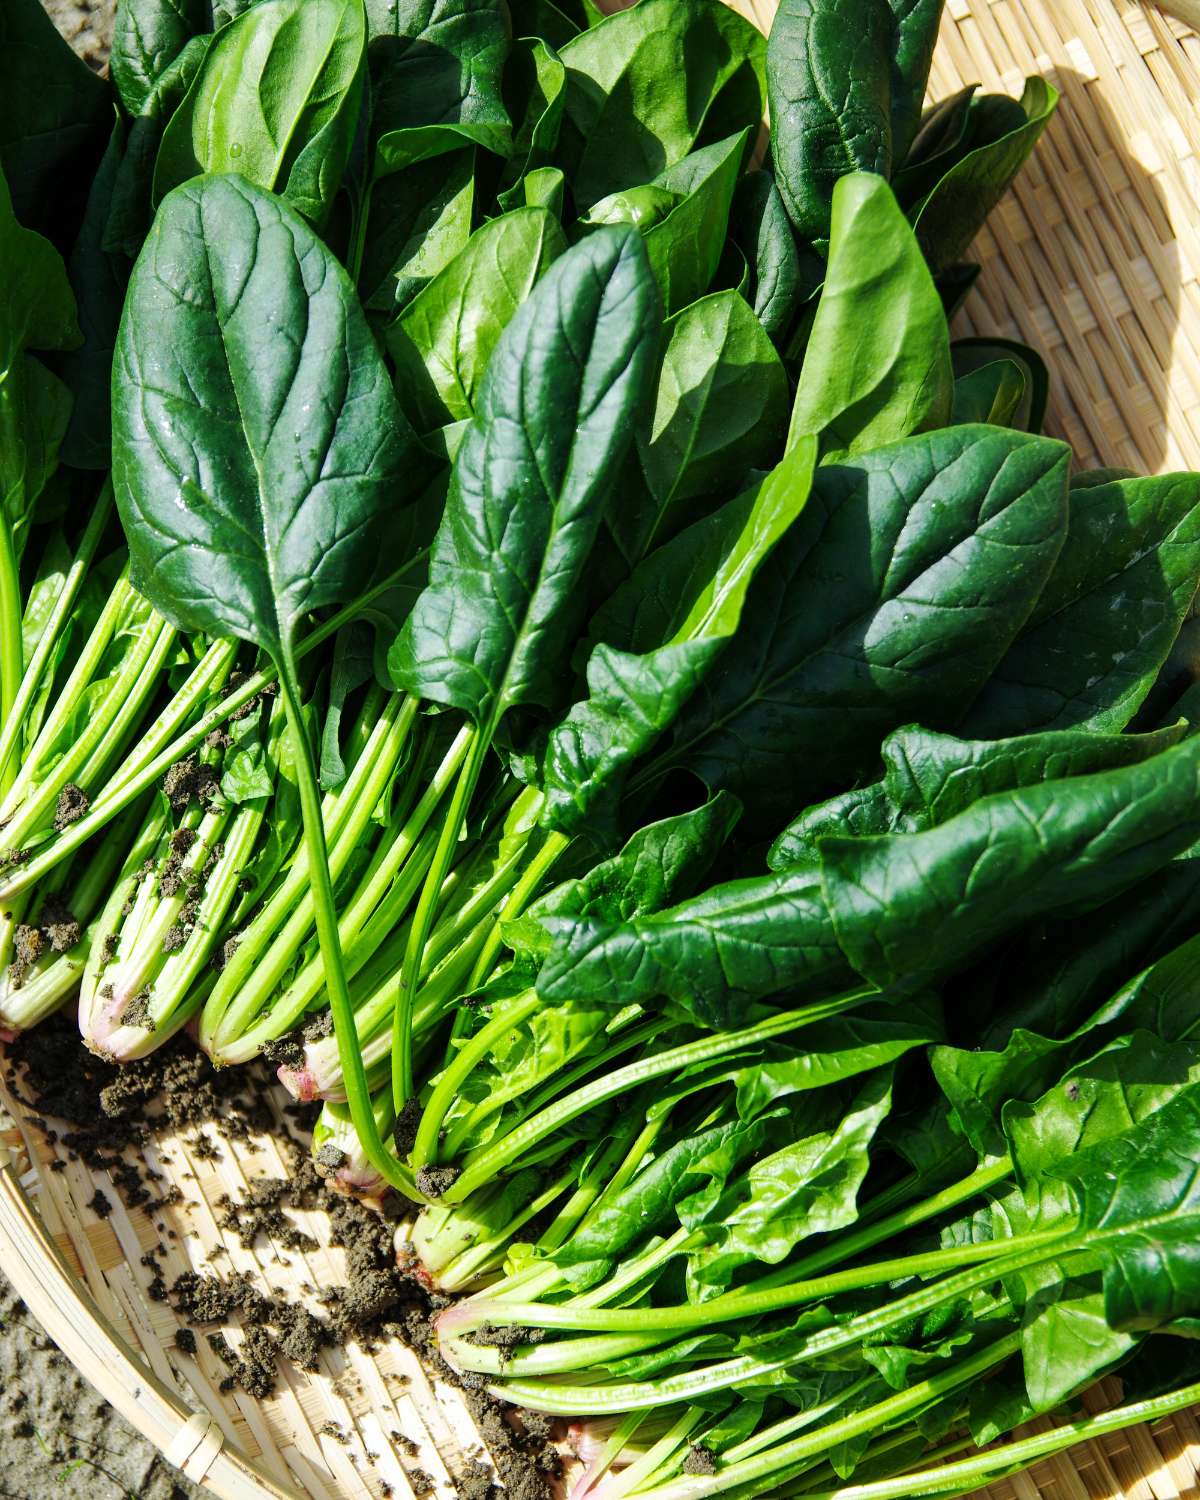 Fresh spinach in a basket.